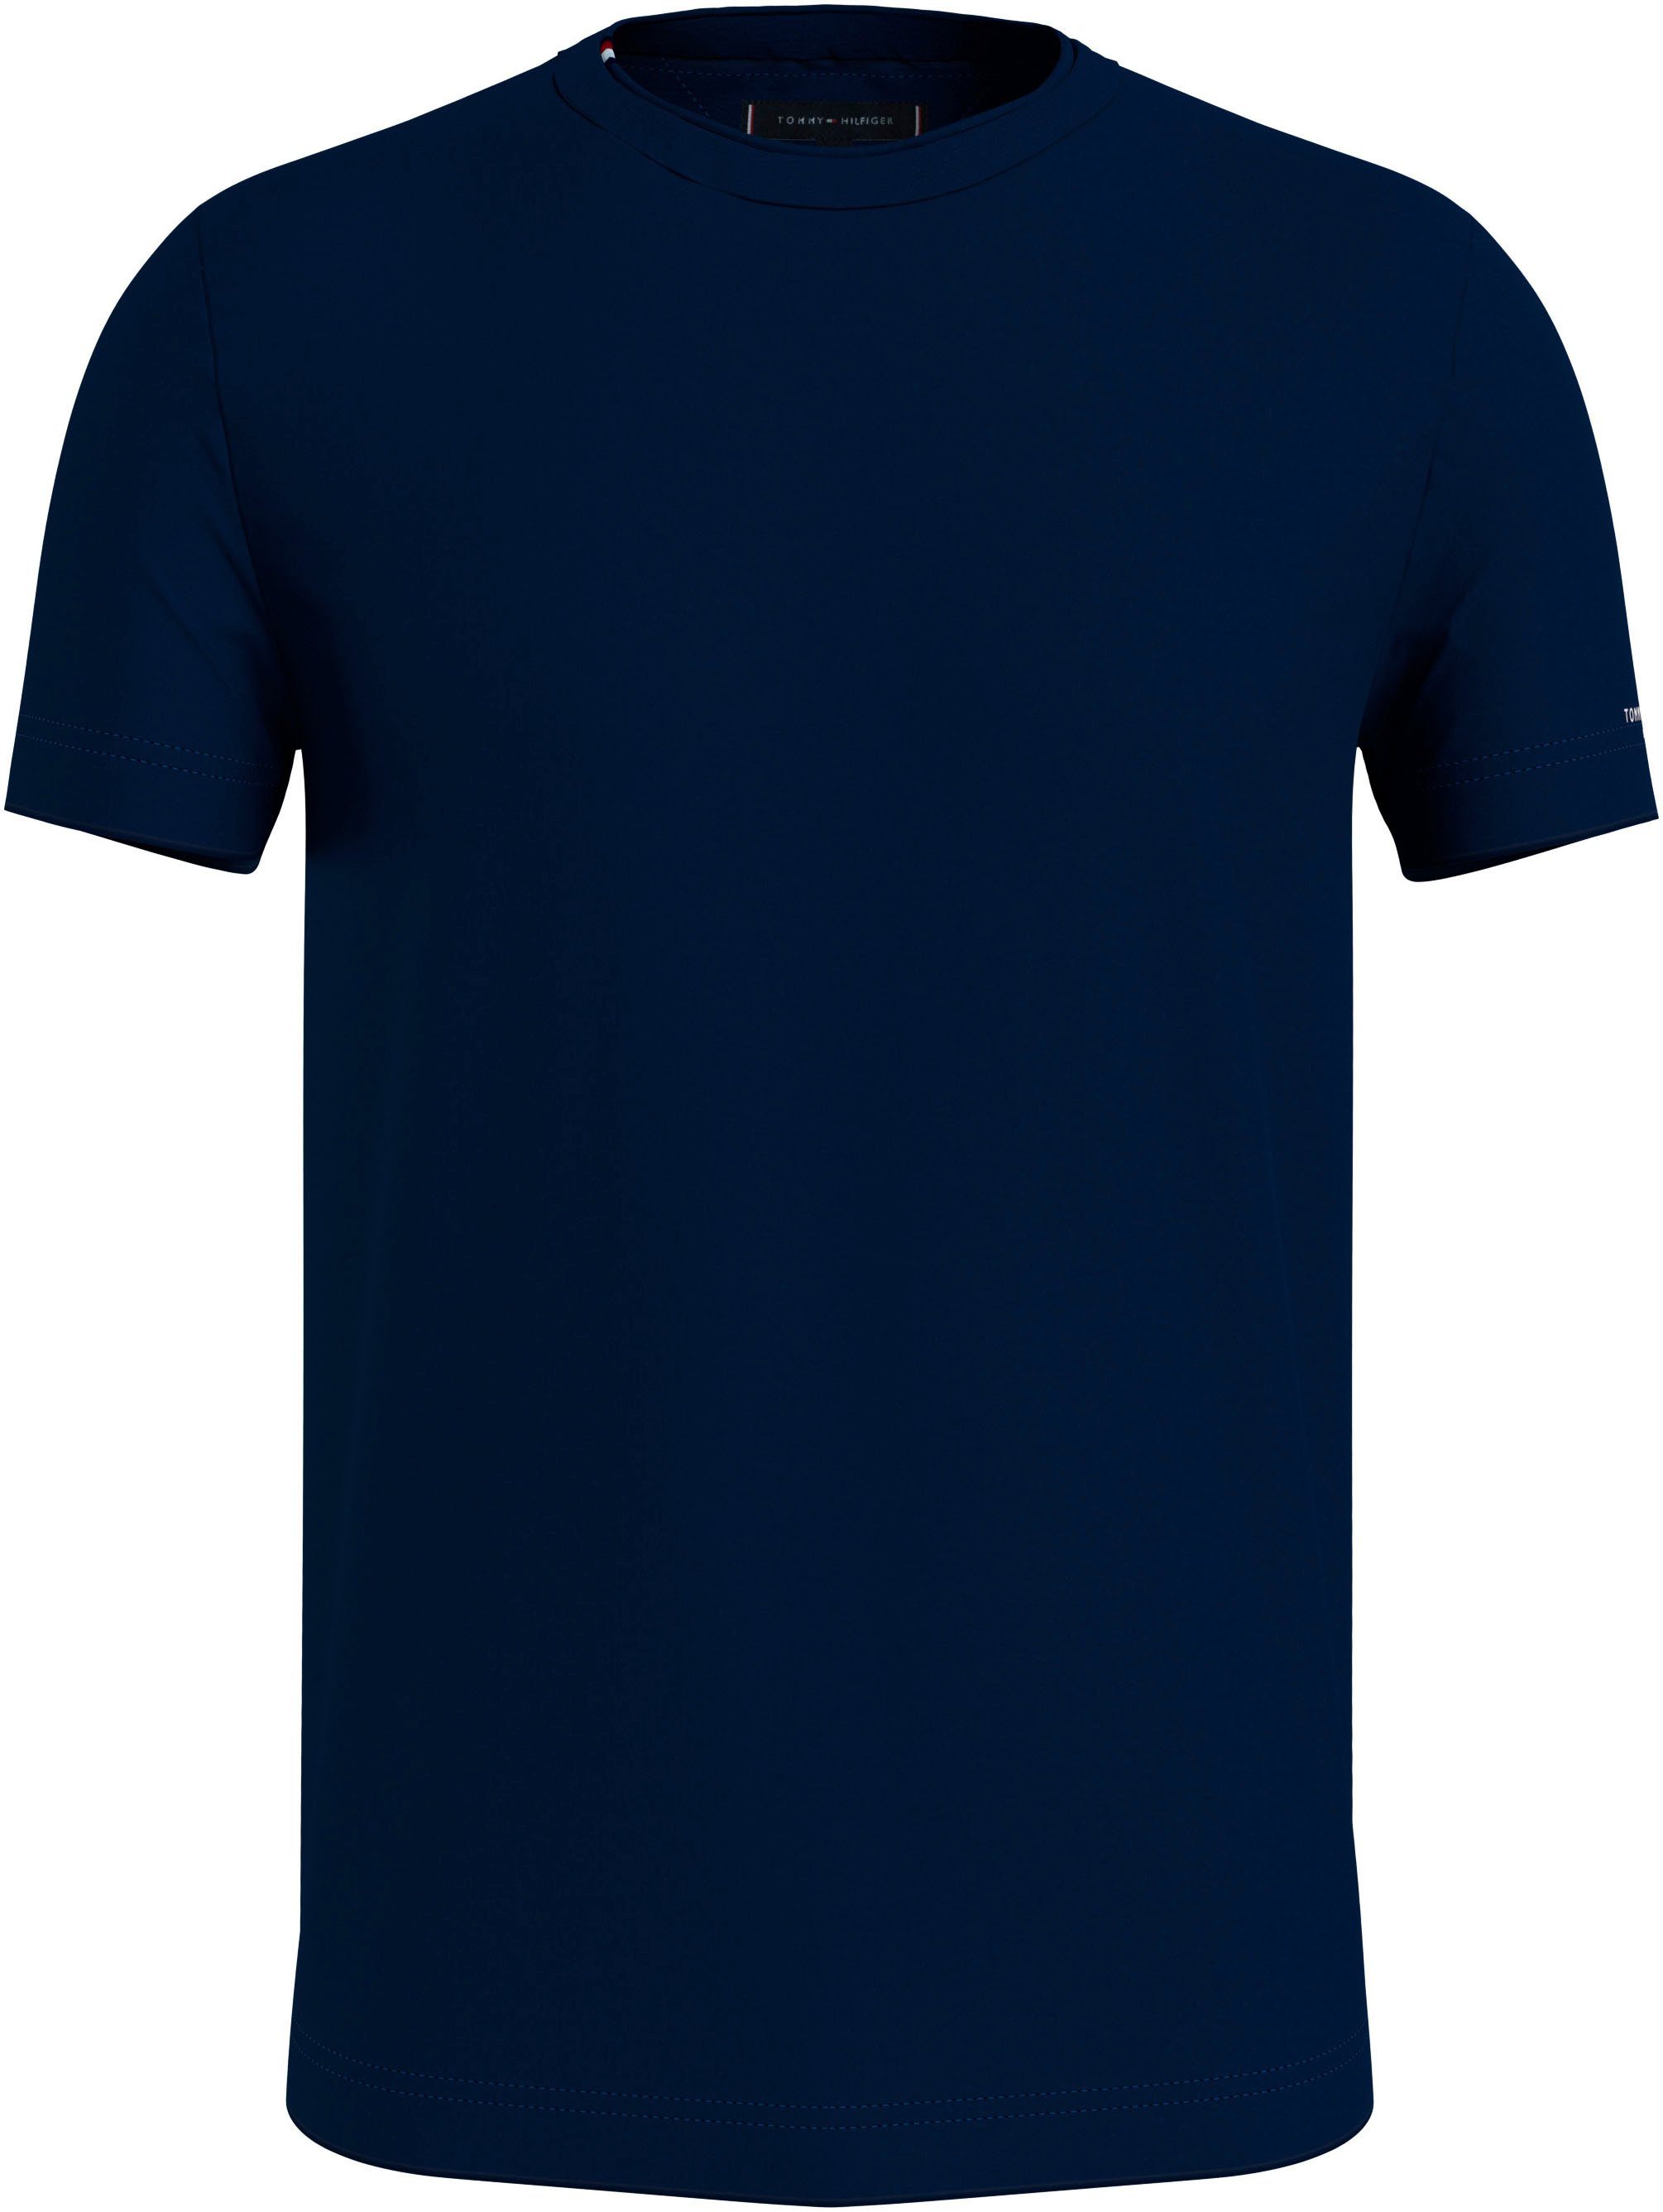 SLEEVE Tommy Hilfiger mit TEE Logoschriftzug TOMMY am T-Shirt LOGO Arm